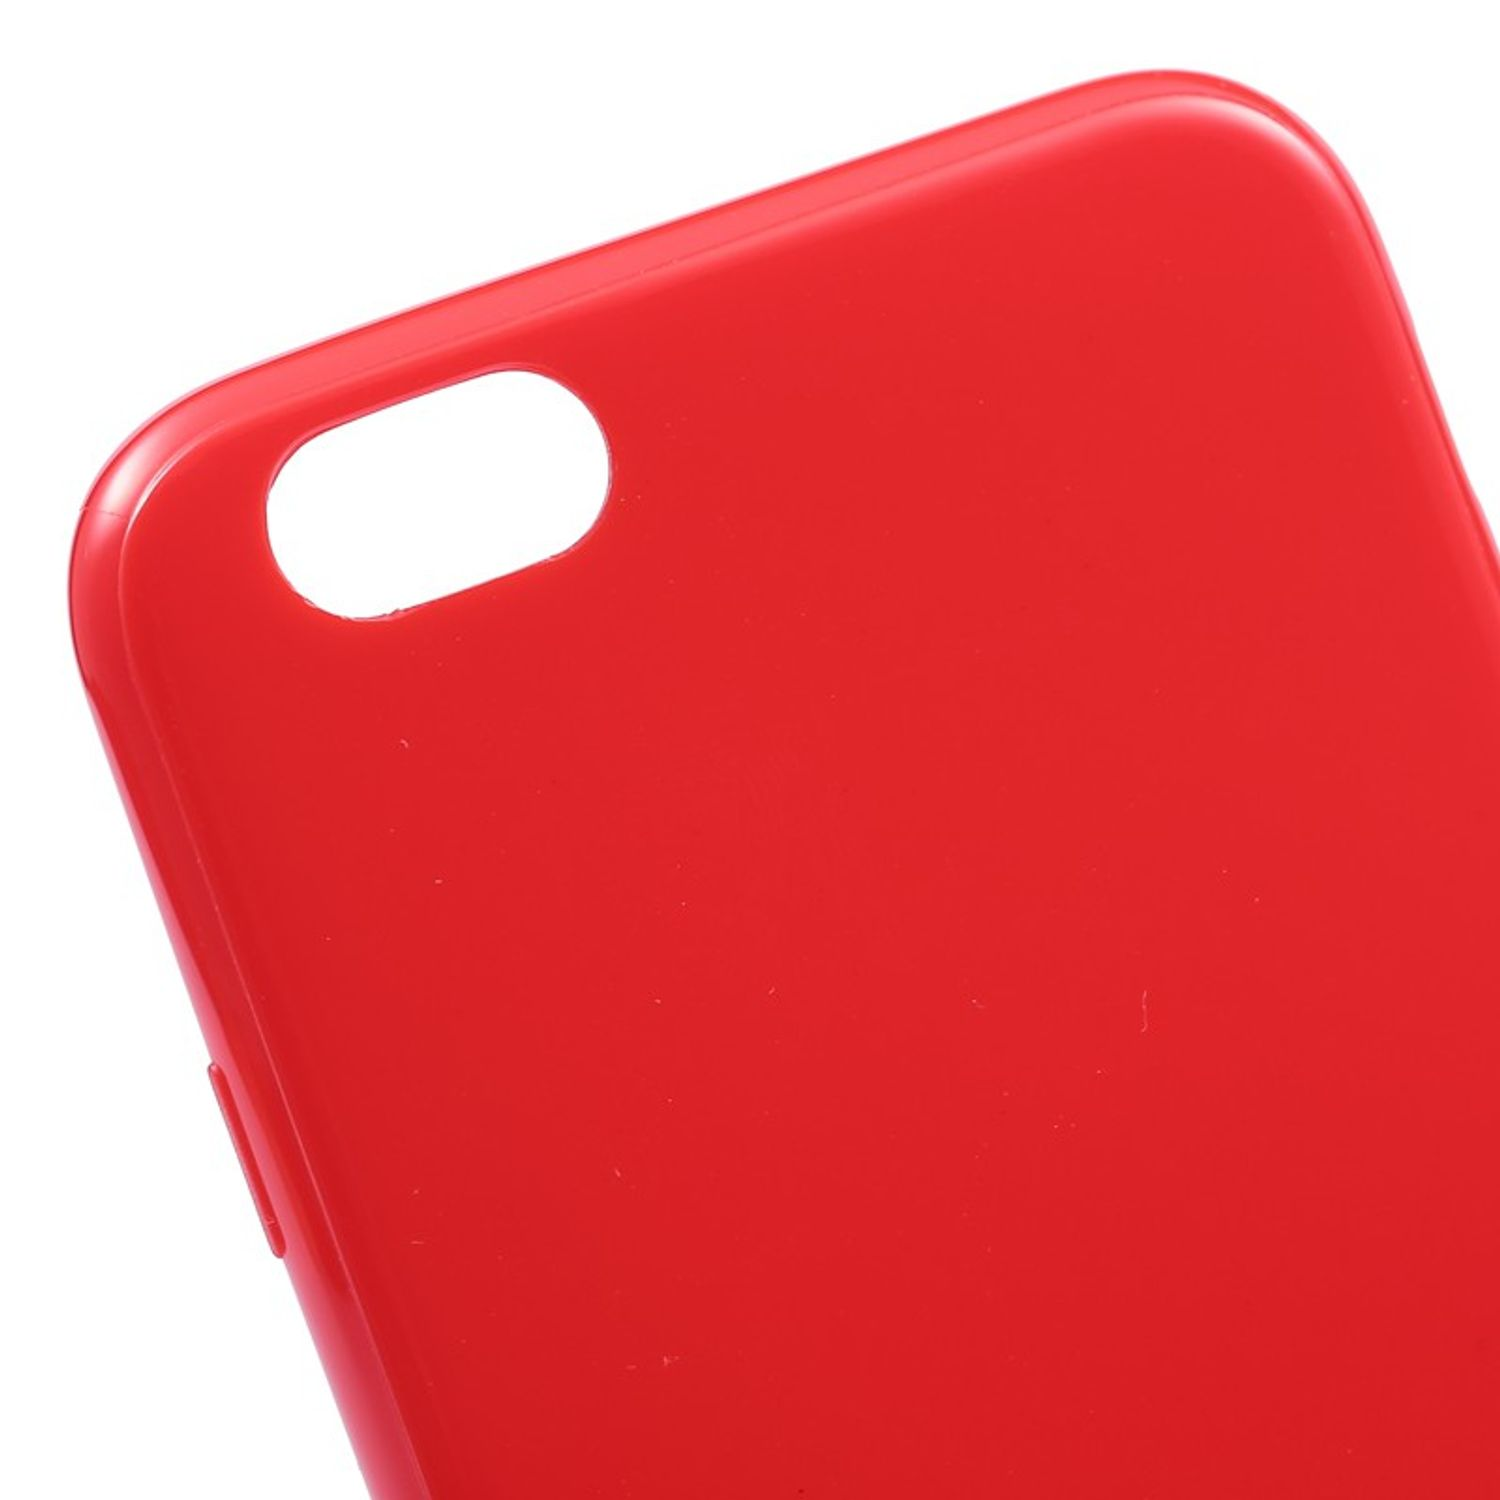 KÖNIG DESIGN Rot 6 6s, / iPhone Apple, Backcover, Handyhülle